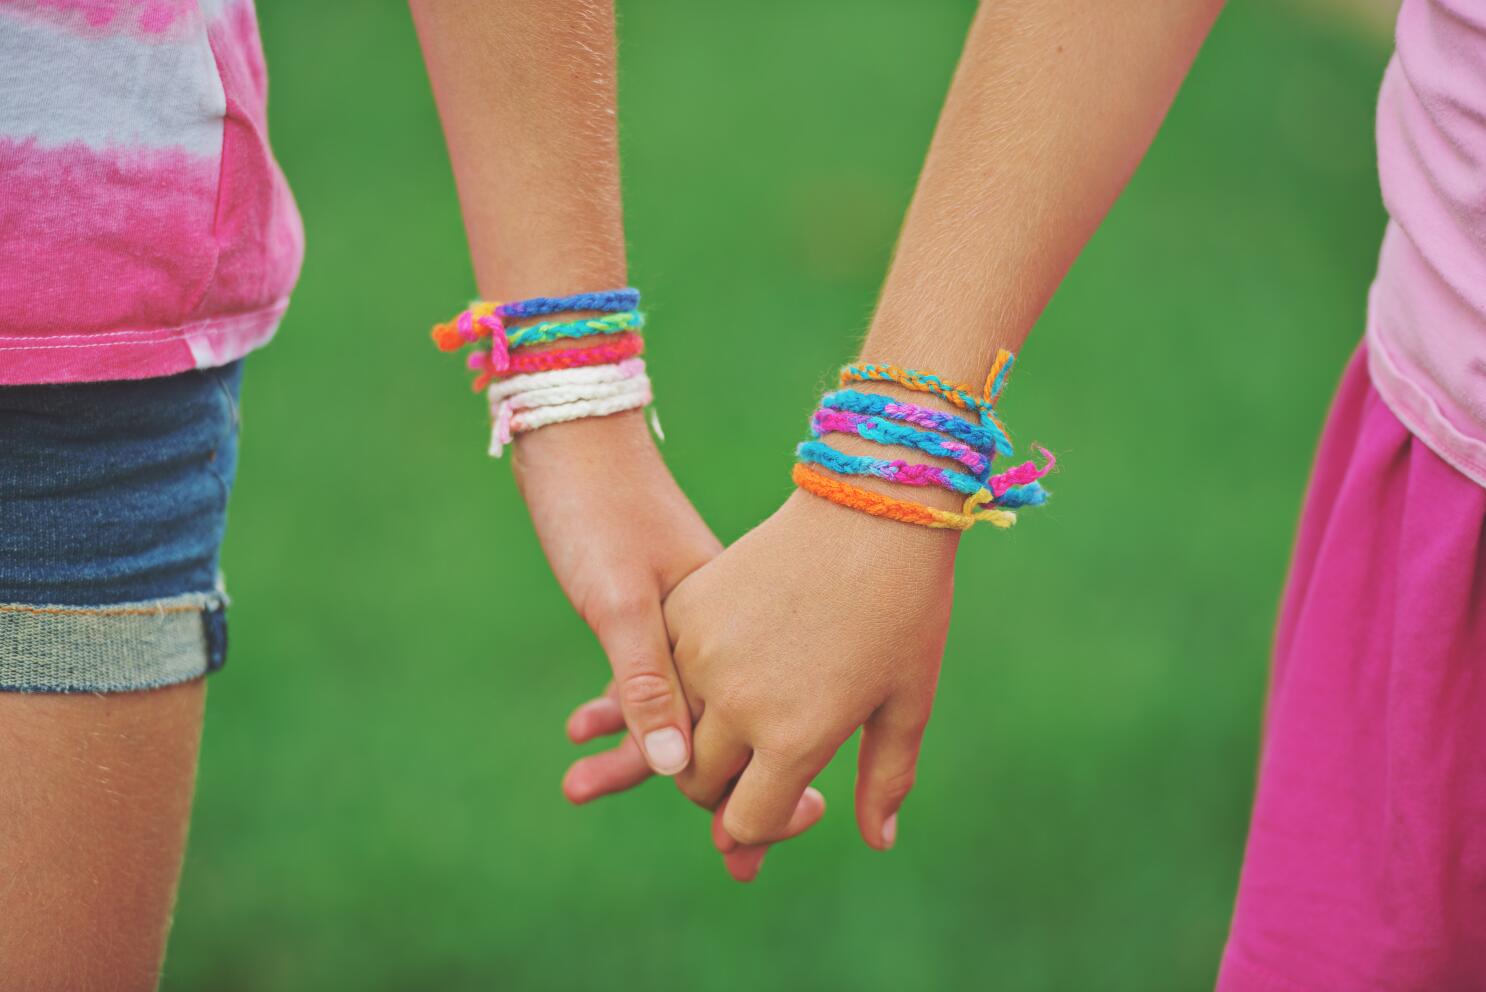 Friendship Bracelet Kit for Kids & Teens. Give a Friendship Gift